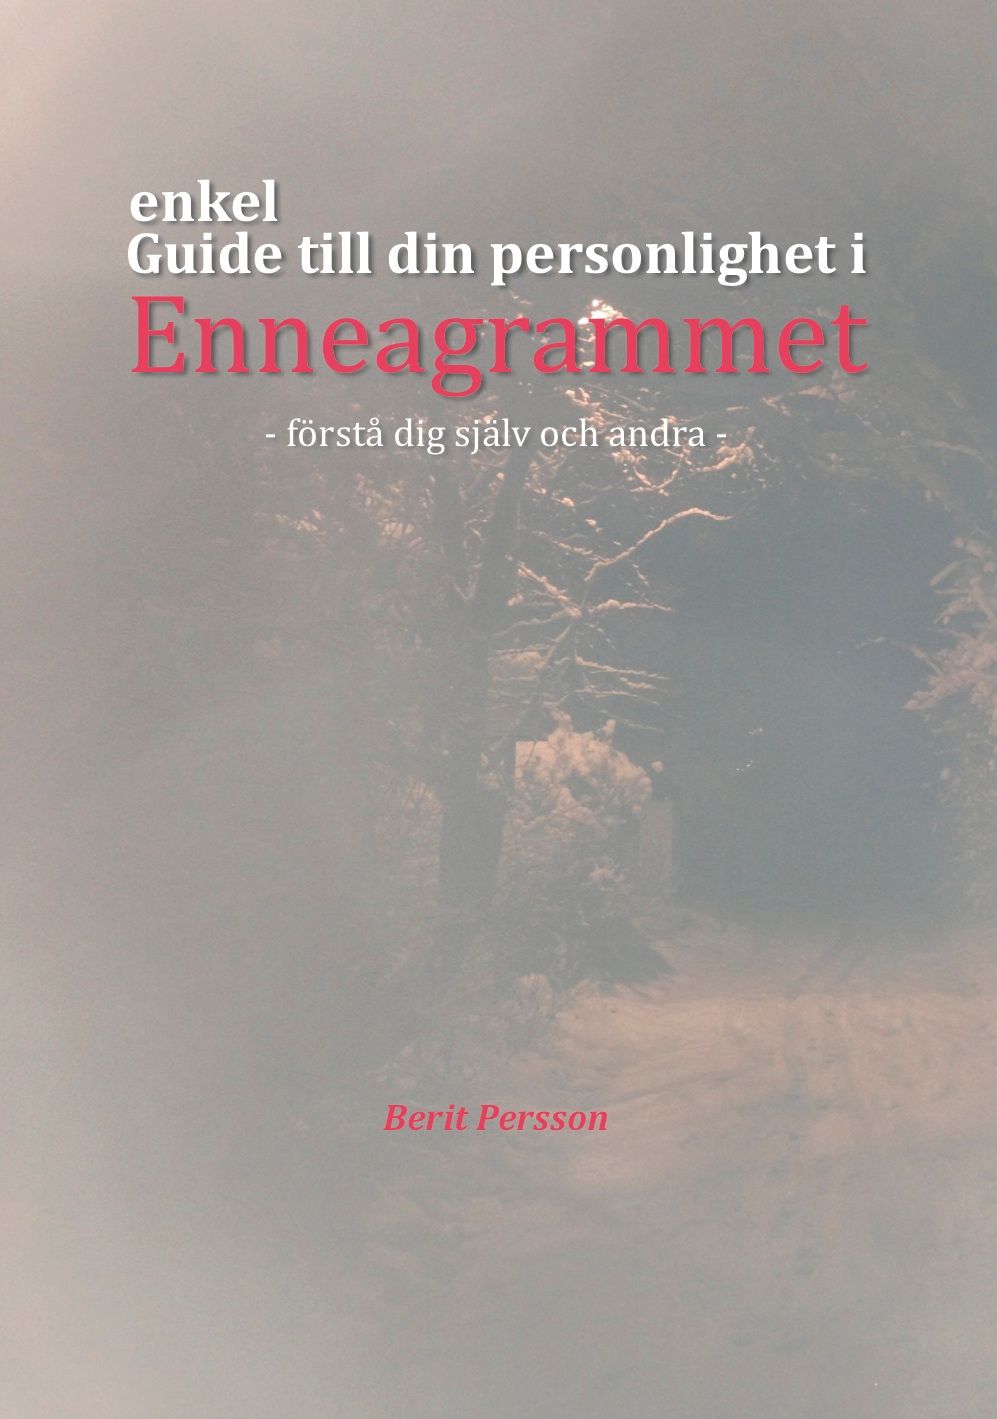 Guide till din personlighet i Enneagrammet, eBook by Berit Peersson